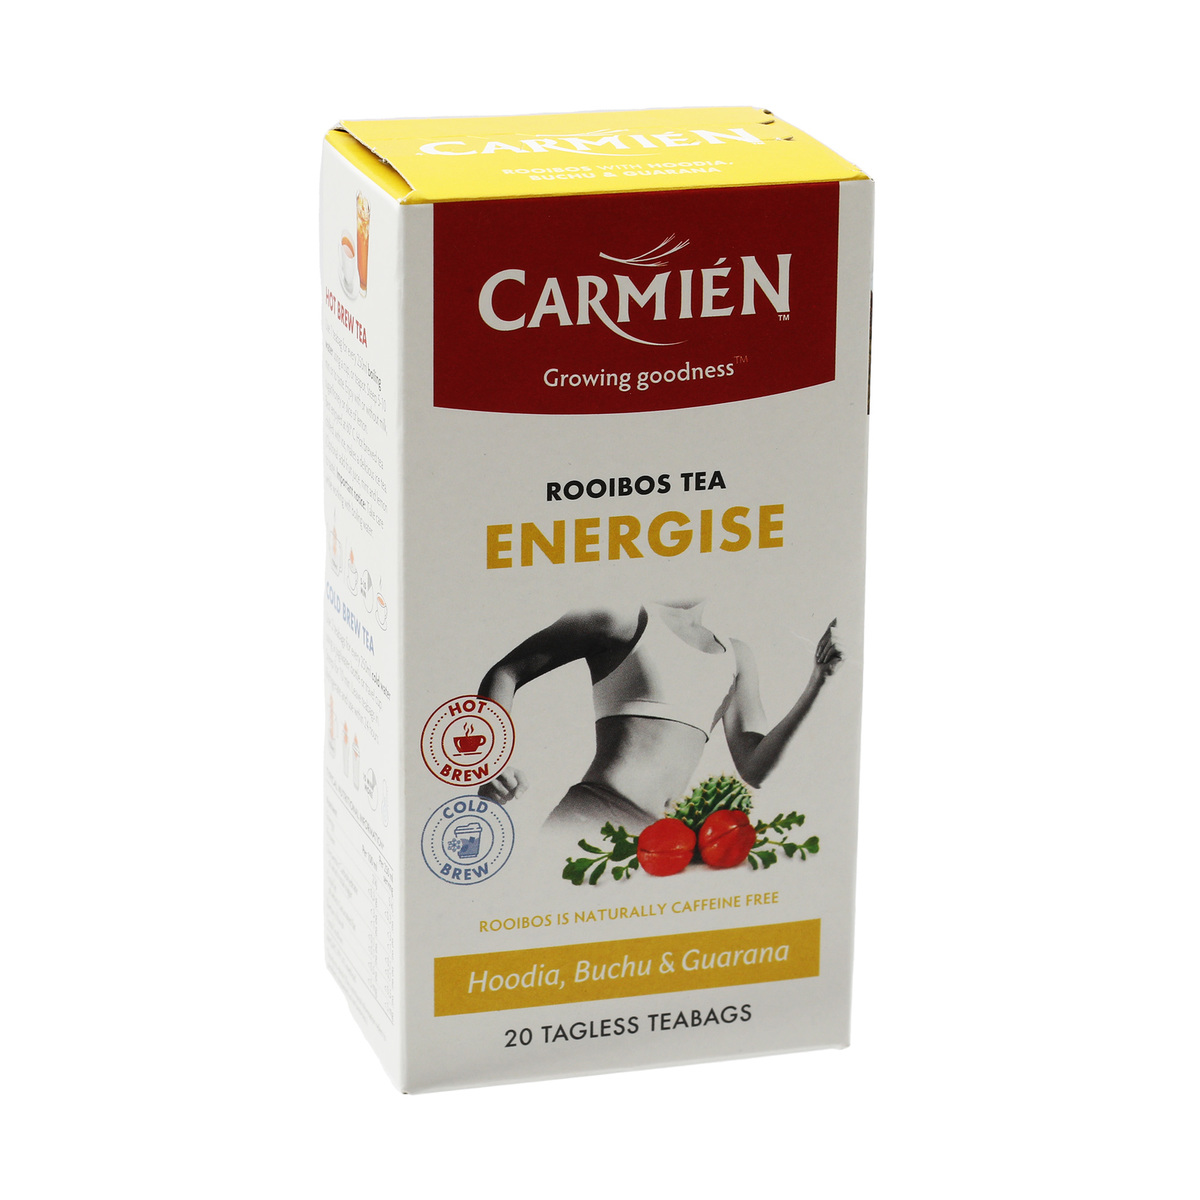 Carmien Rooibos Tea Energise 20 Teabags